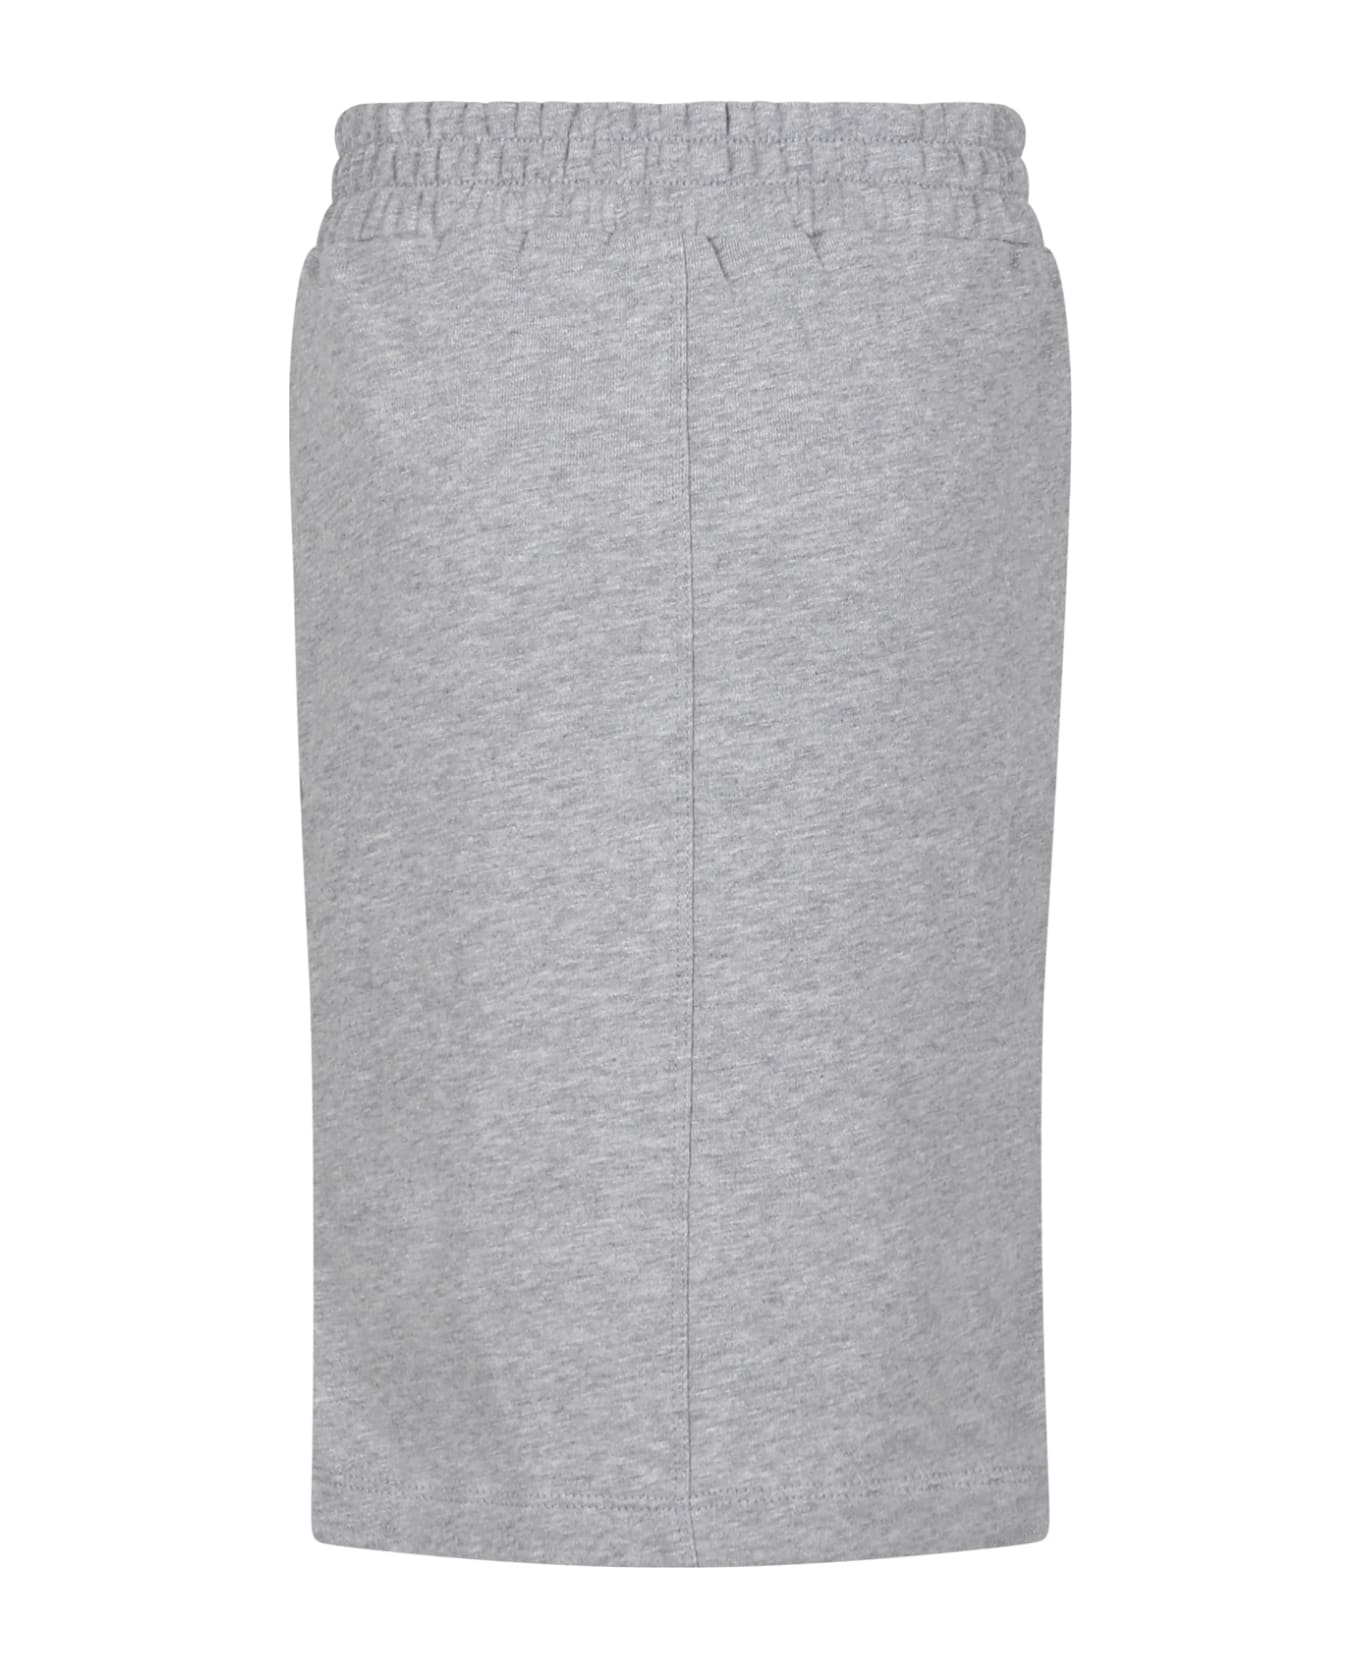 Marni Gray Skirt For Girl With Logo - Grey ボトムス